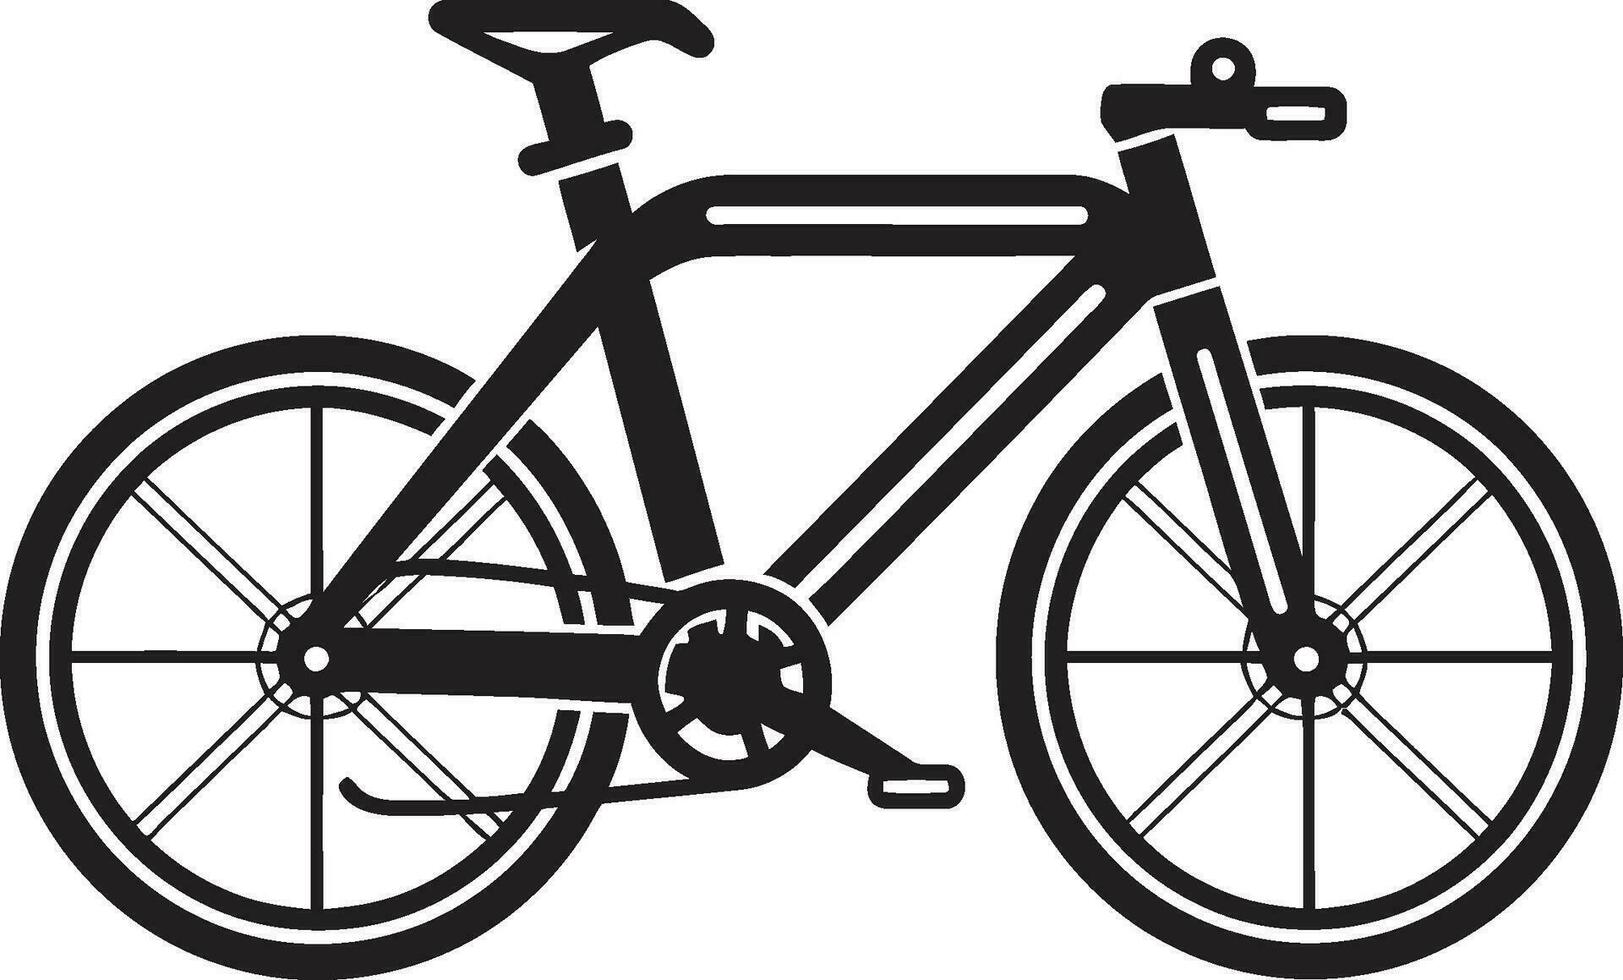 Pedal Emblem Bike Logo Design Rider s Symbol Vector Bicycle